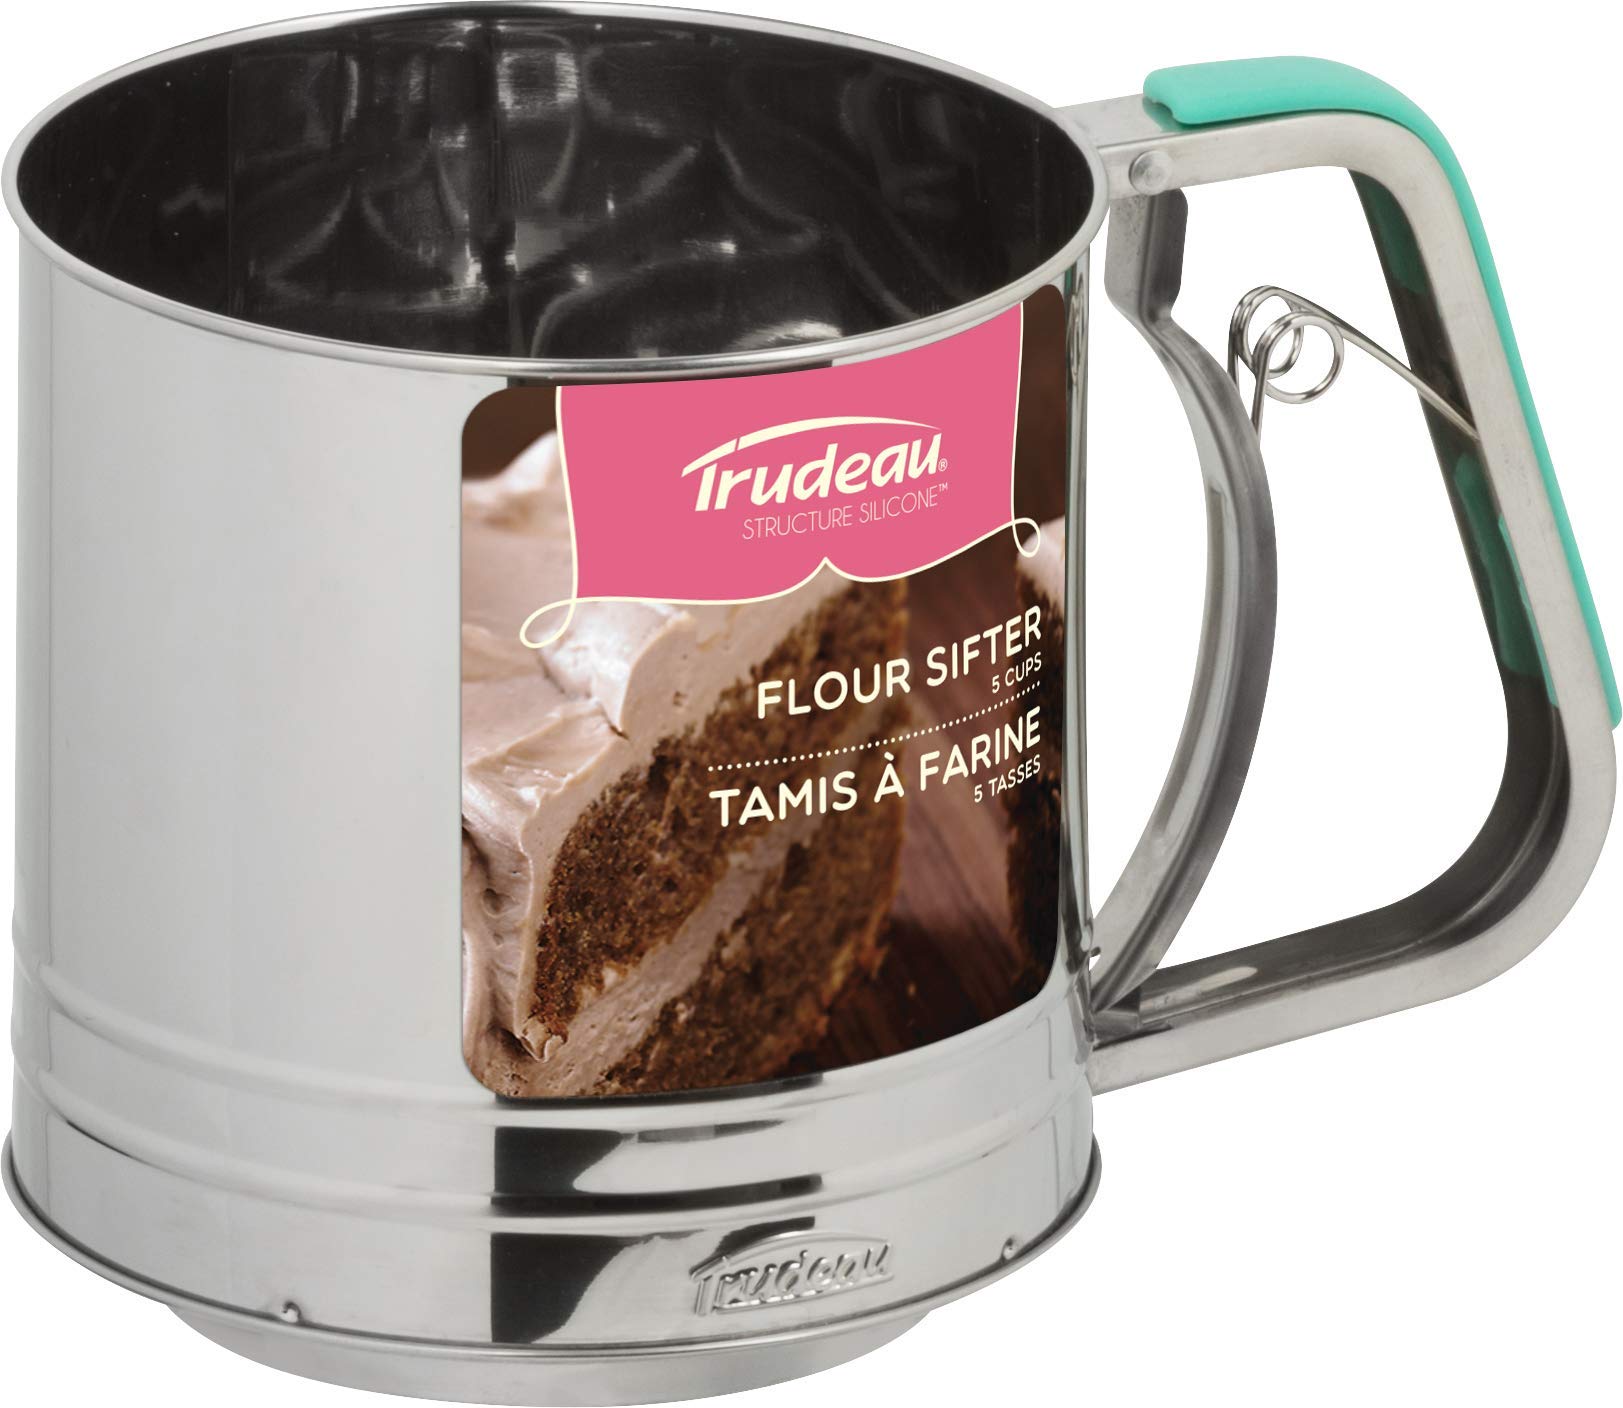 Trudeau   Ss Flour Sifter